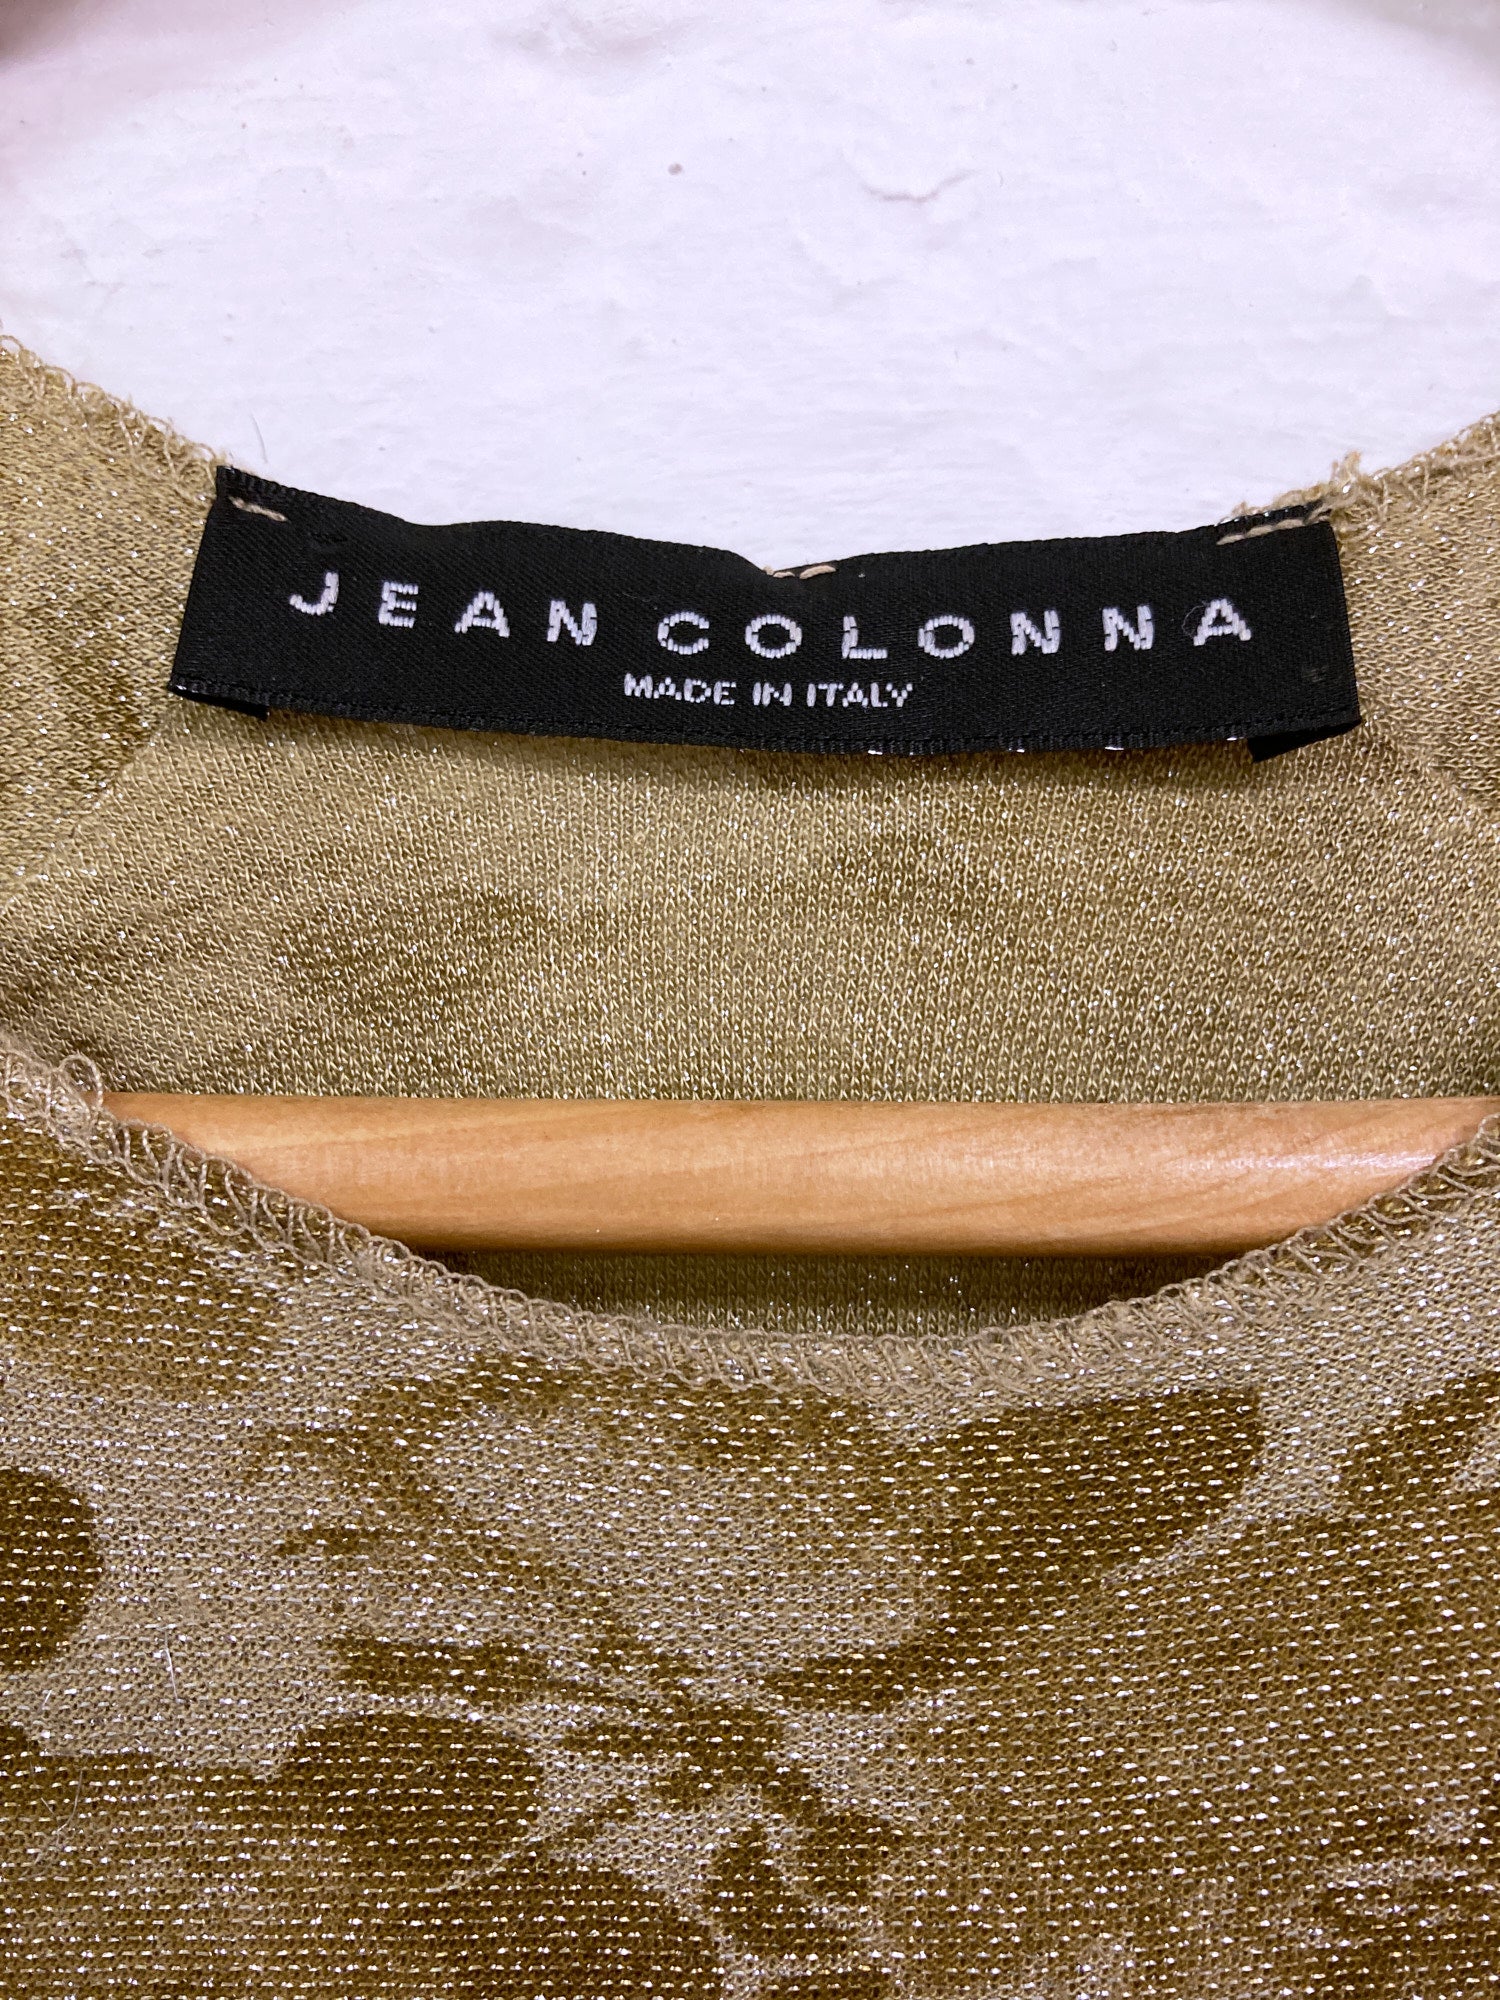 Jean Colonna gold lamé floral print long sleeve top - S